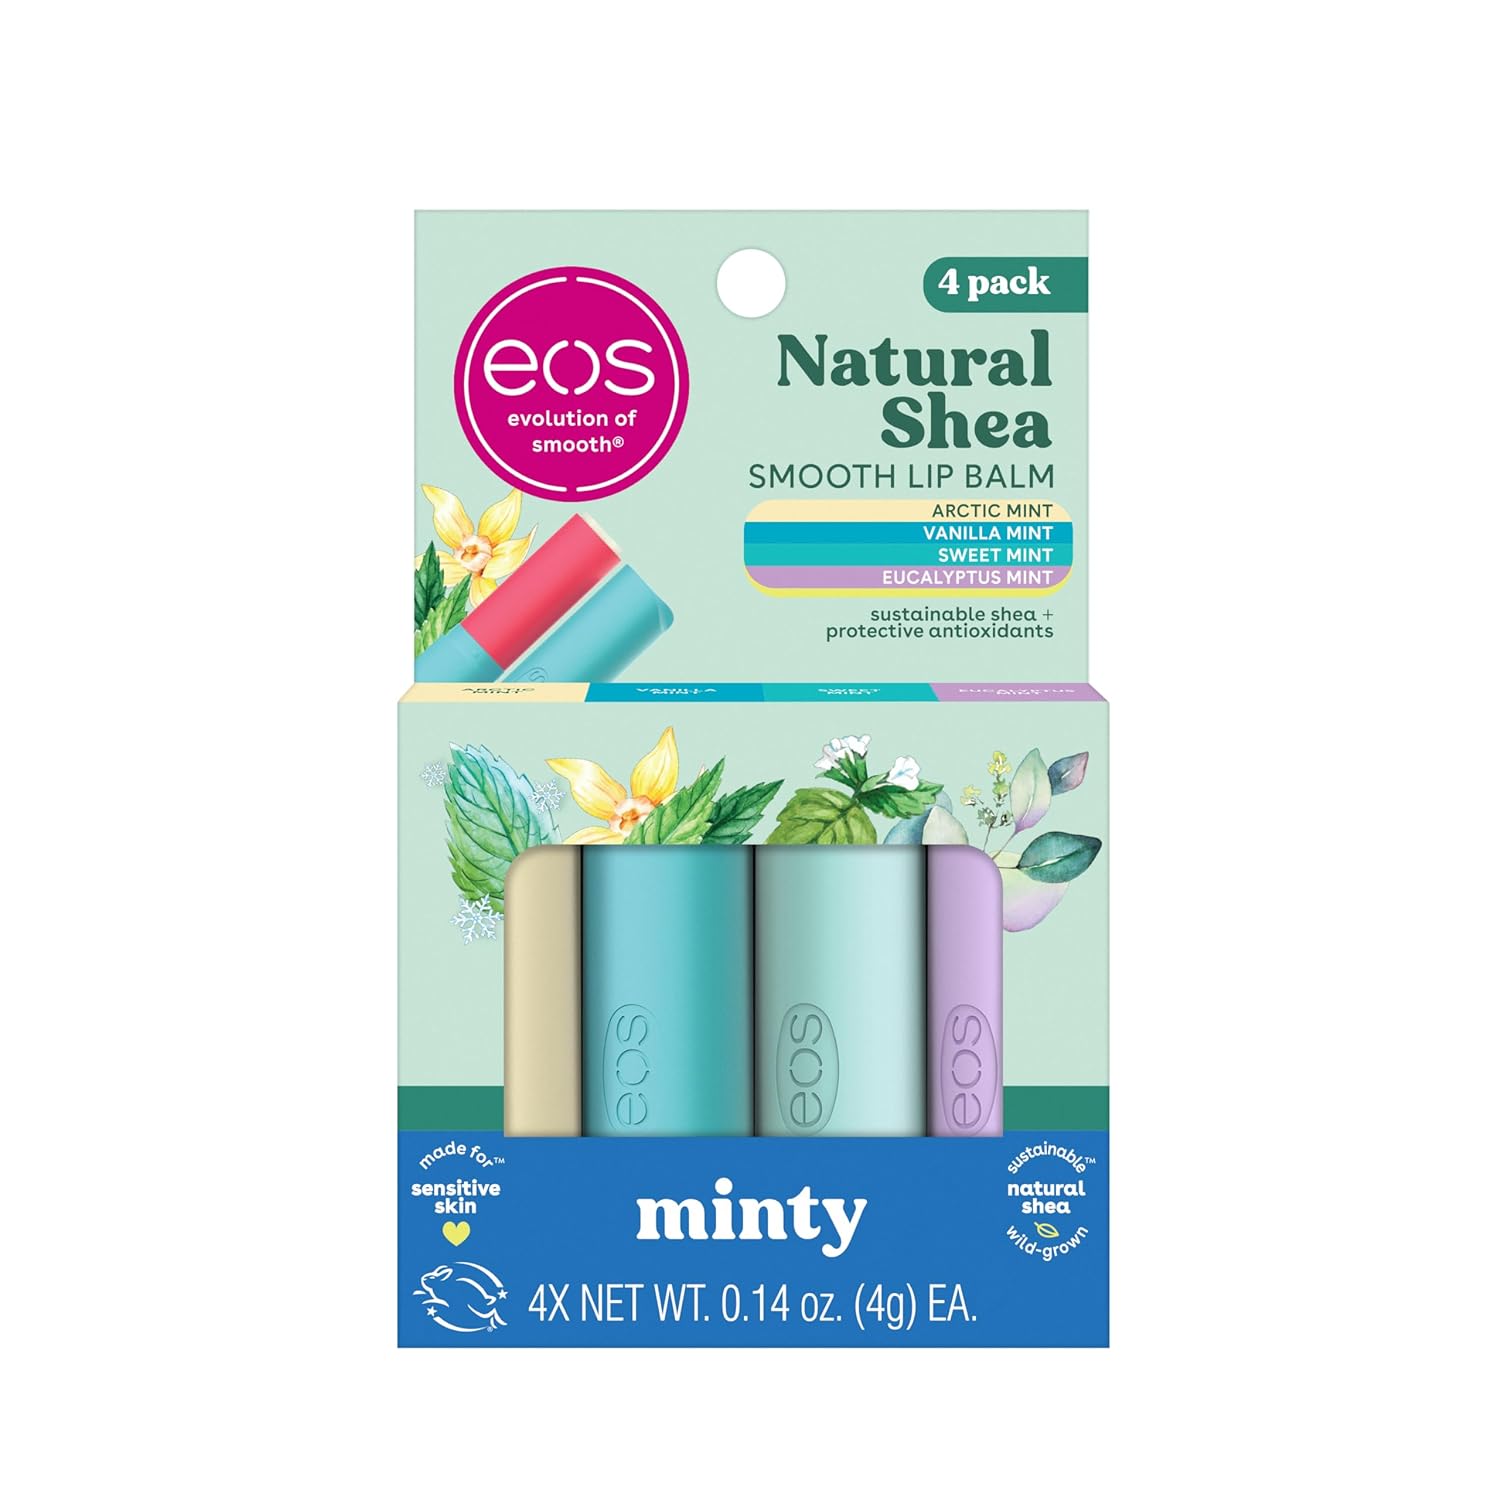 eos Natural Shea Minty Lip Balm Variet Pack- Artic Mint, Vanilla Mint, Sweet Mint, Eucalyptus Mint, All-Day Moisture Lip Balm Gift Set, 0.14 oz, 4-Pack